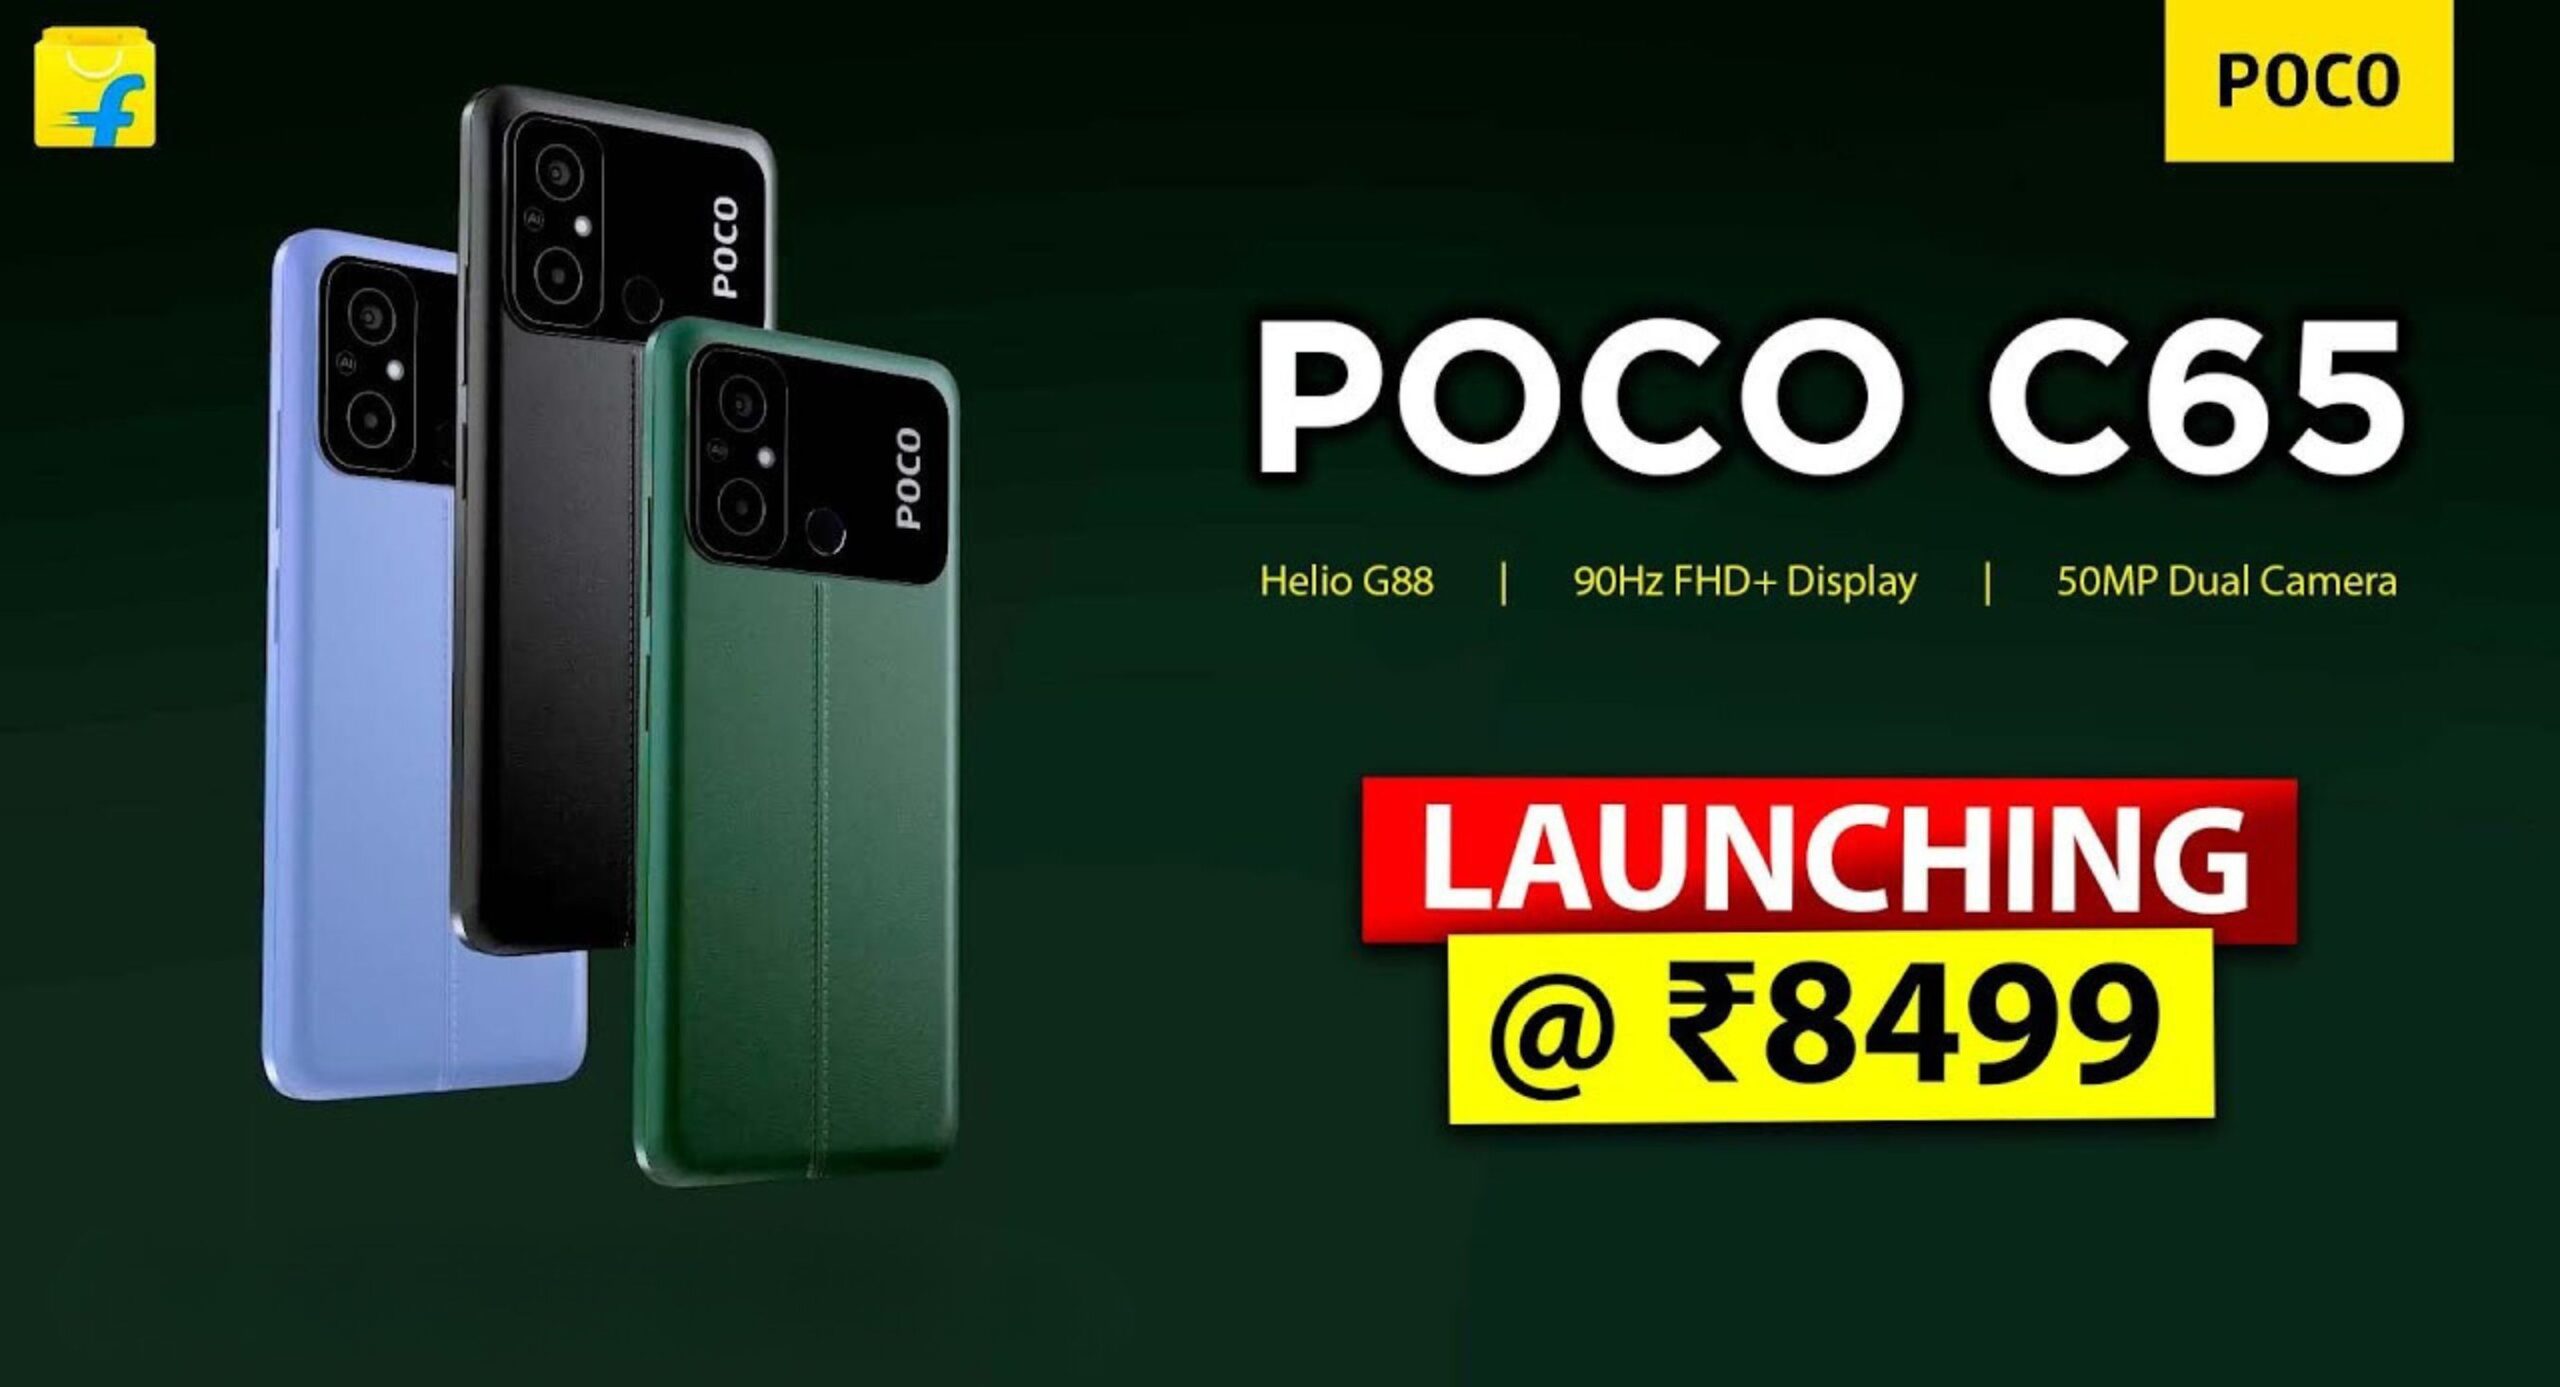 POCO C65 New Smartphone